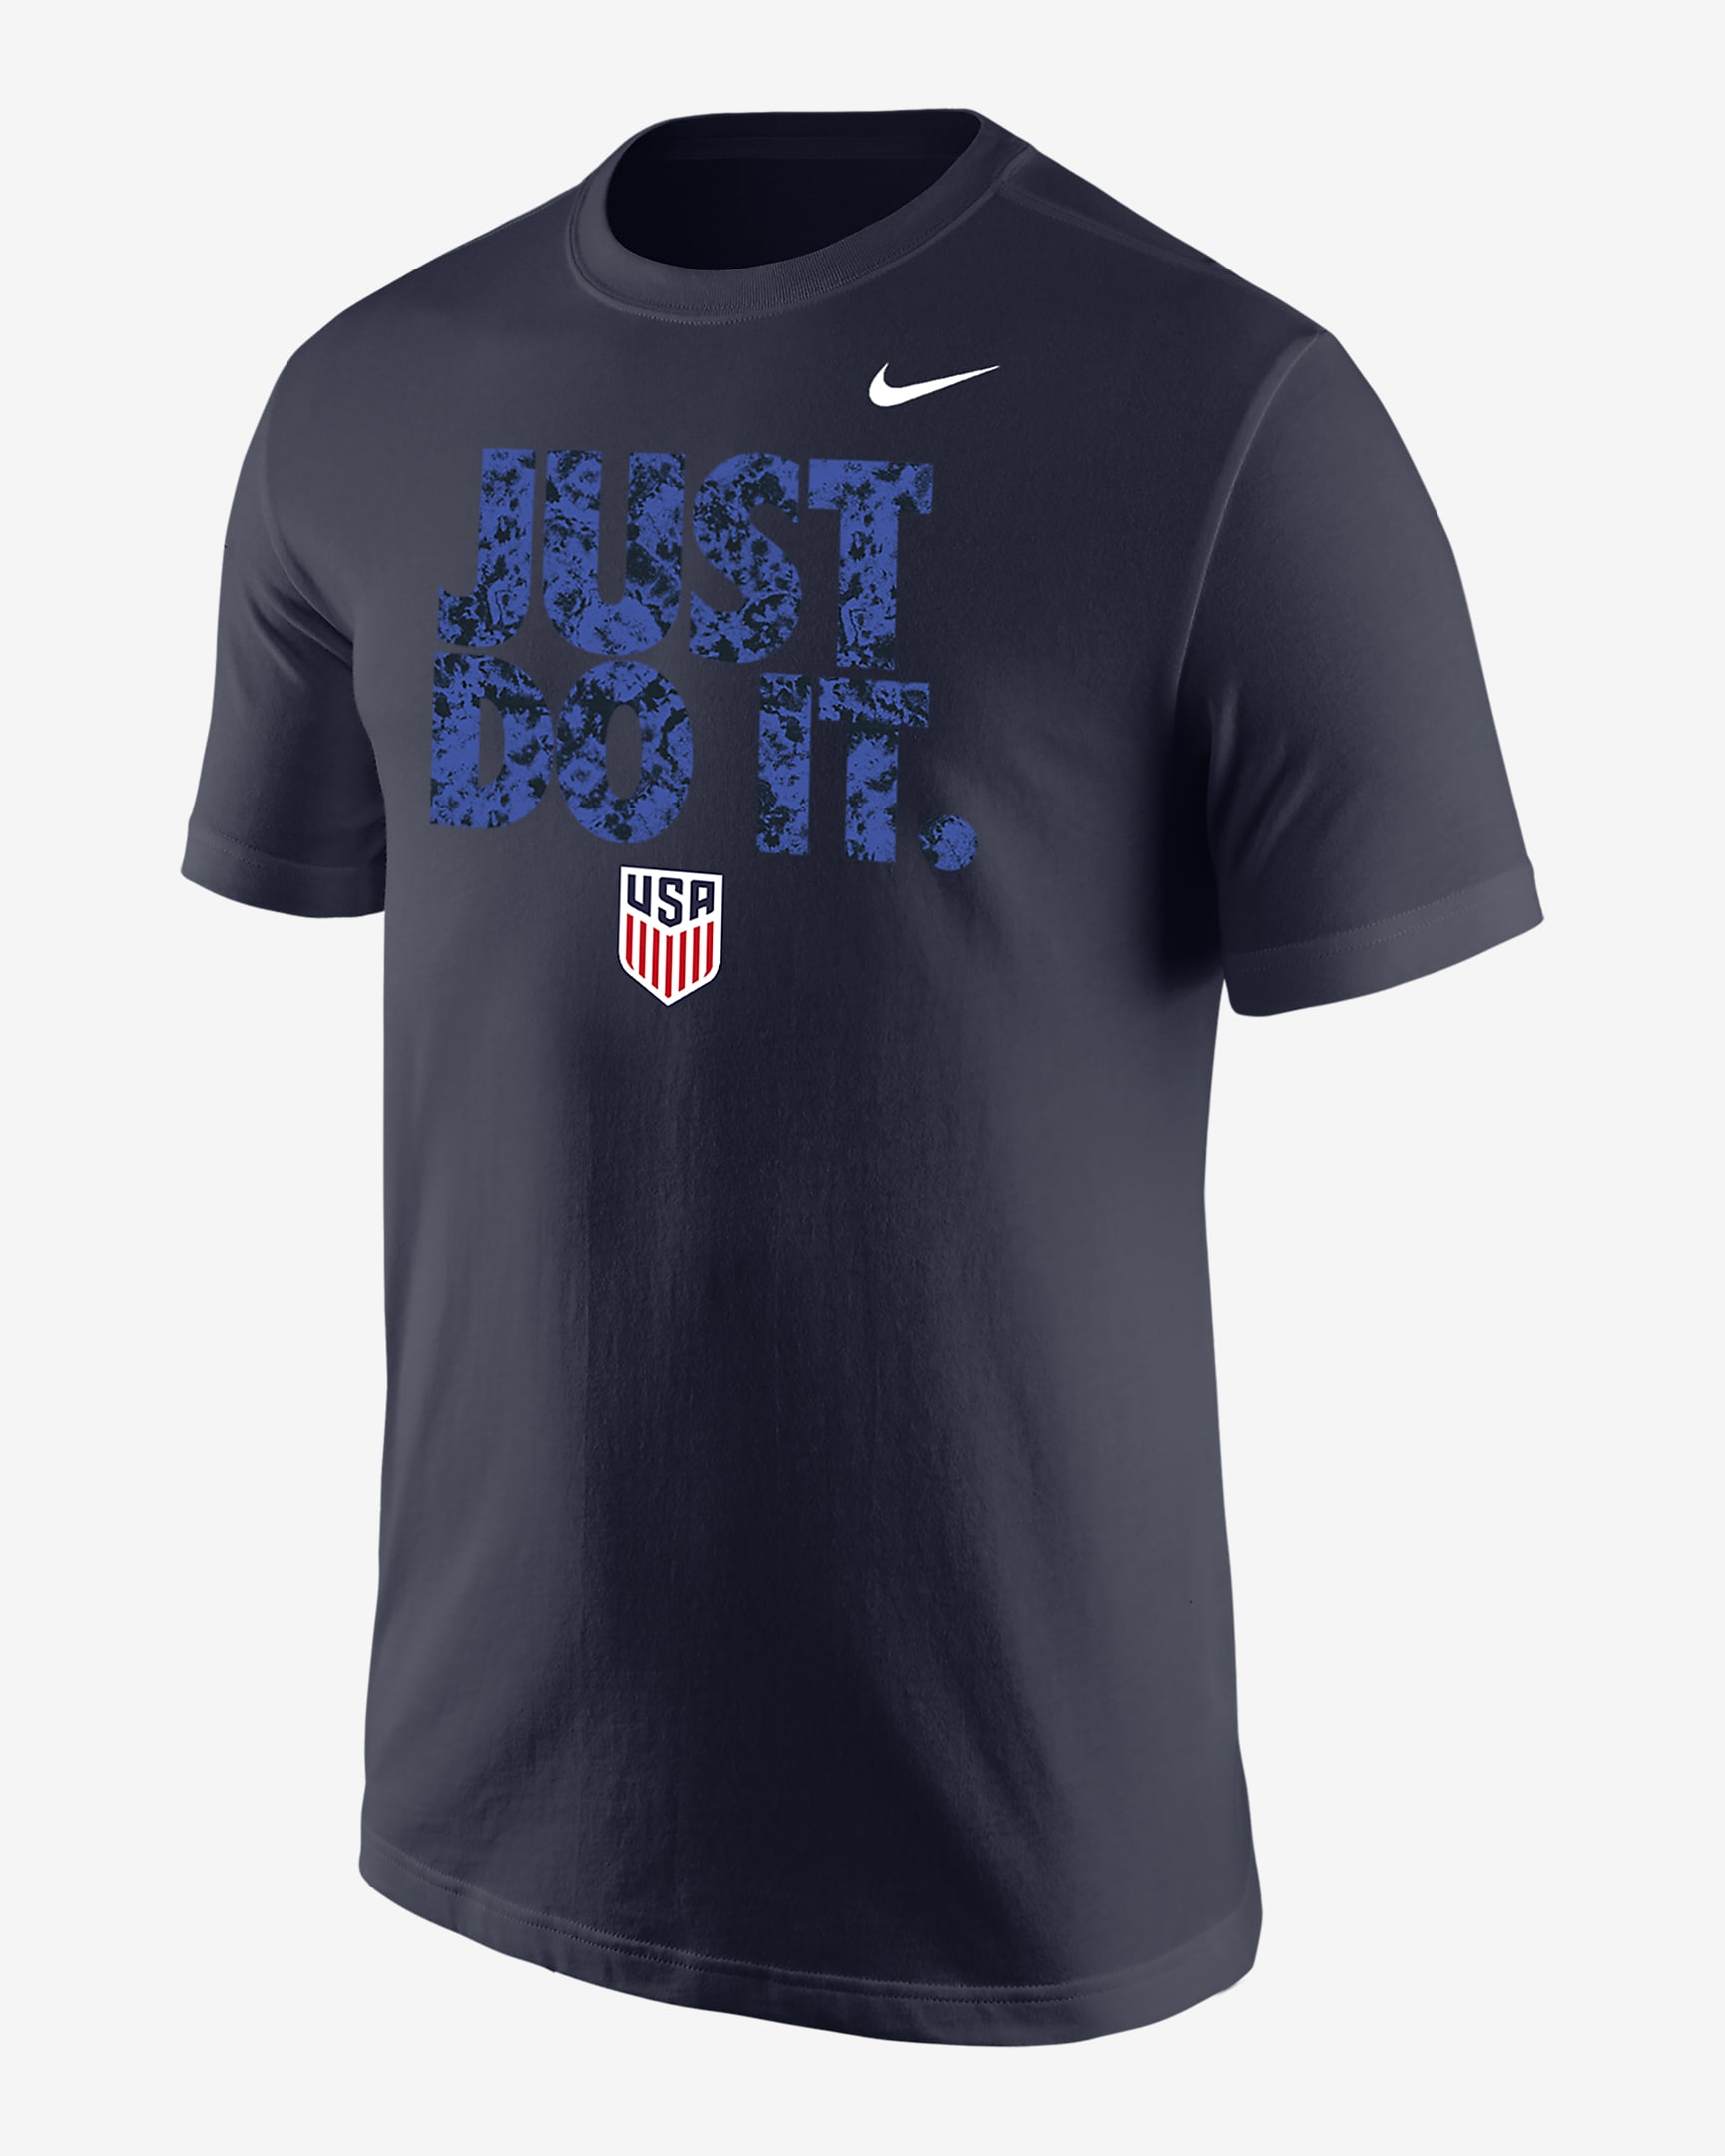 USA Men's Nike Core T-Shirt. Nike.com